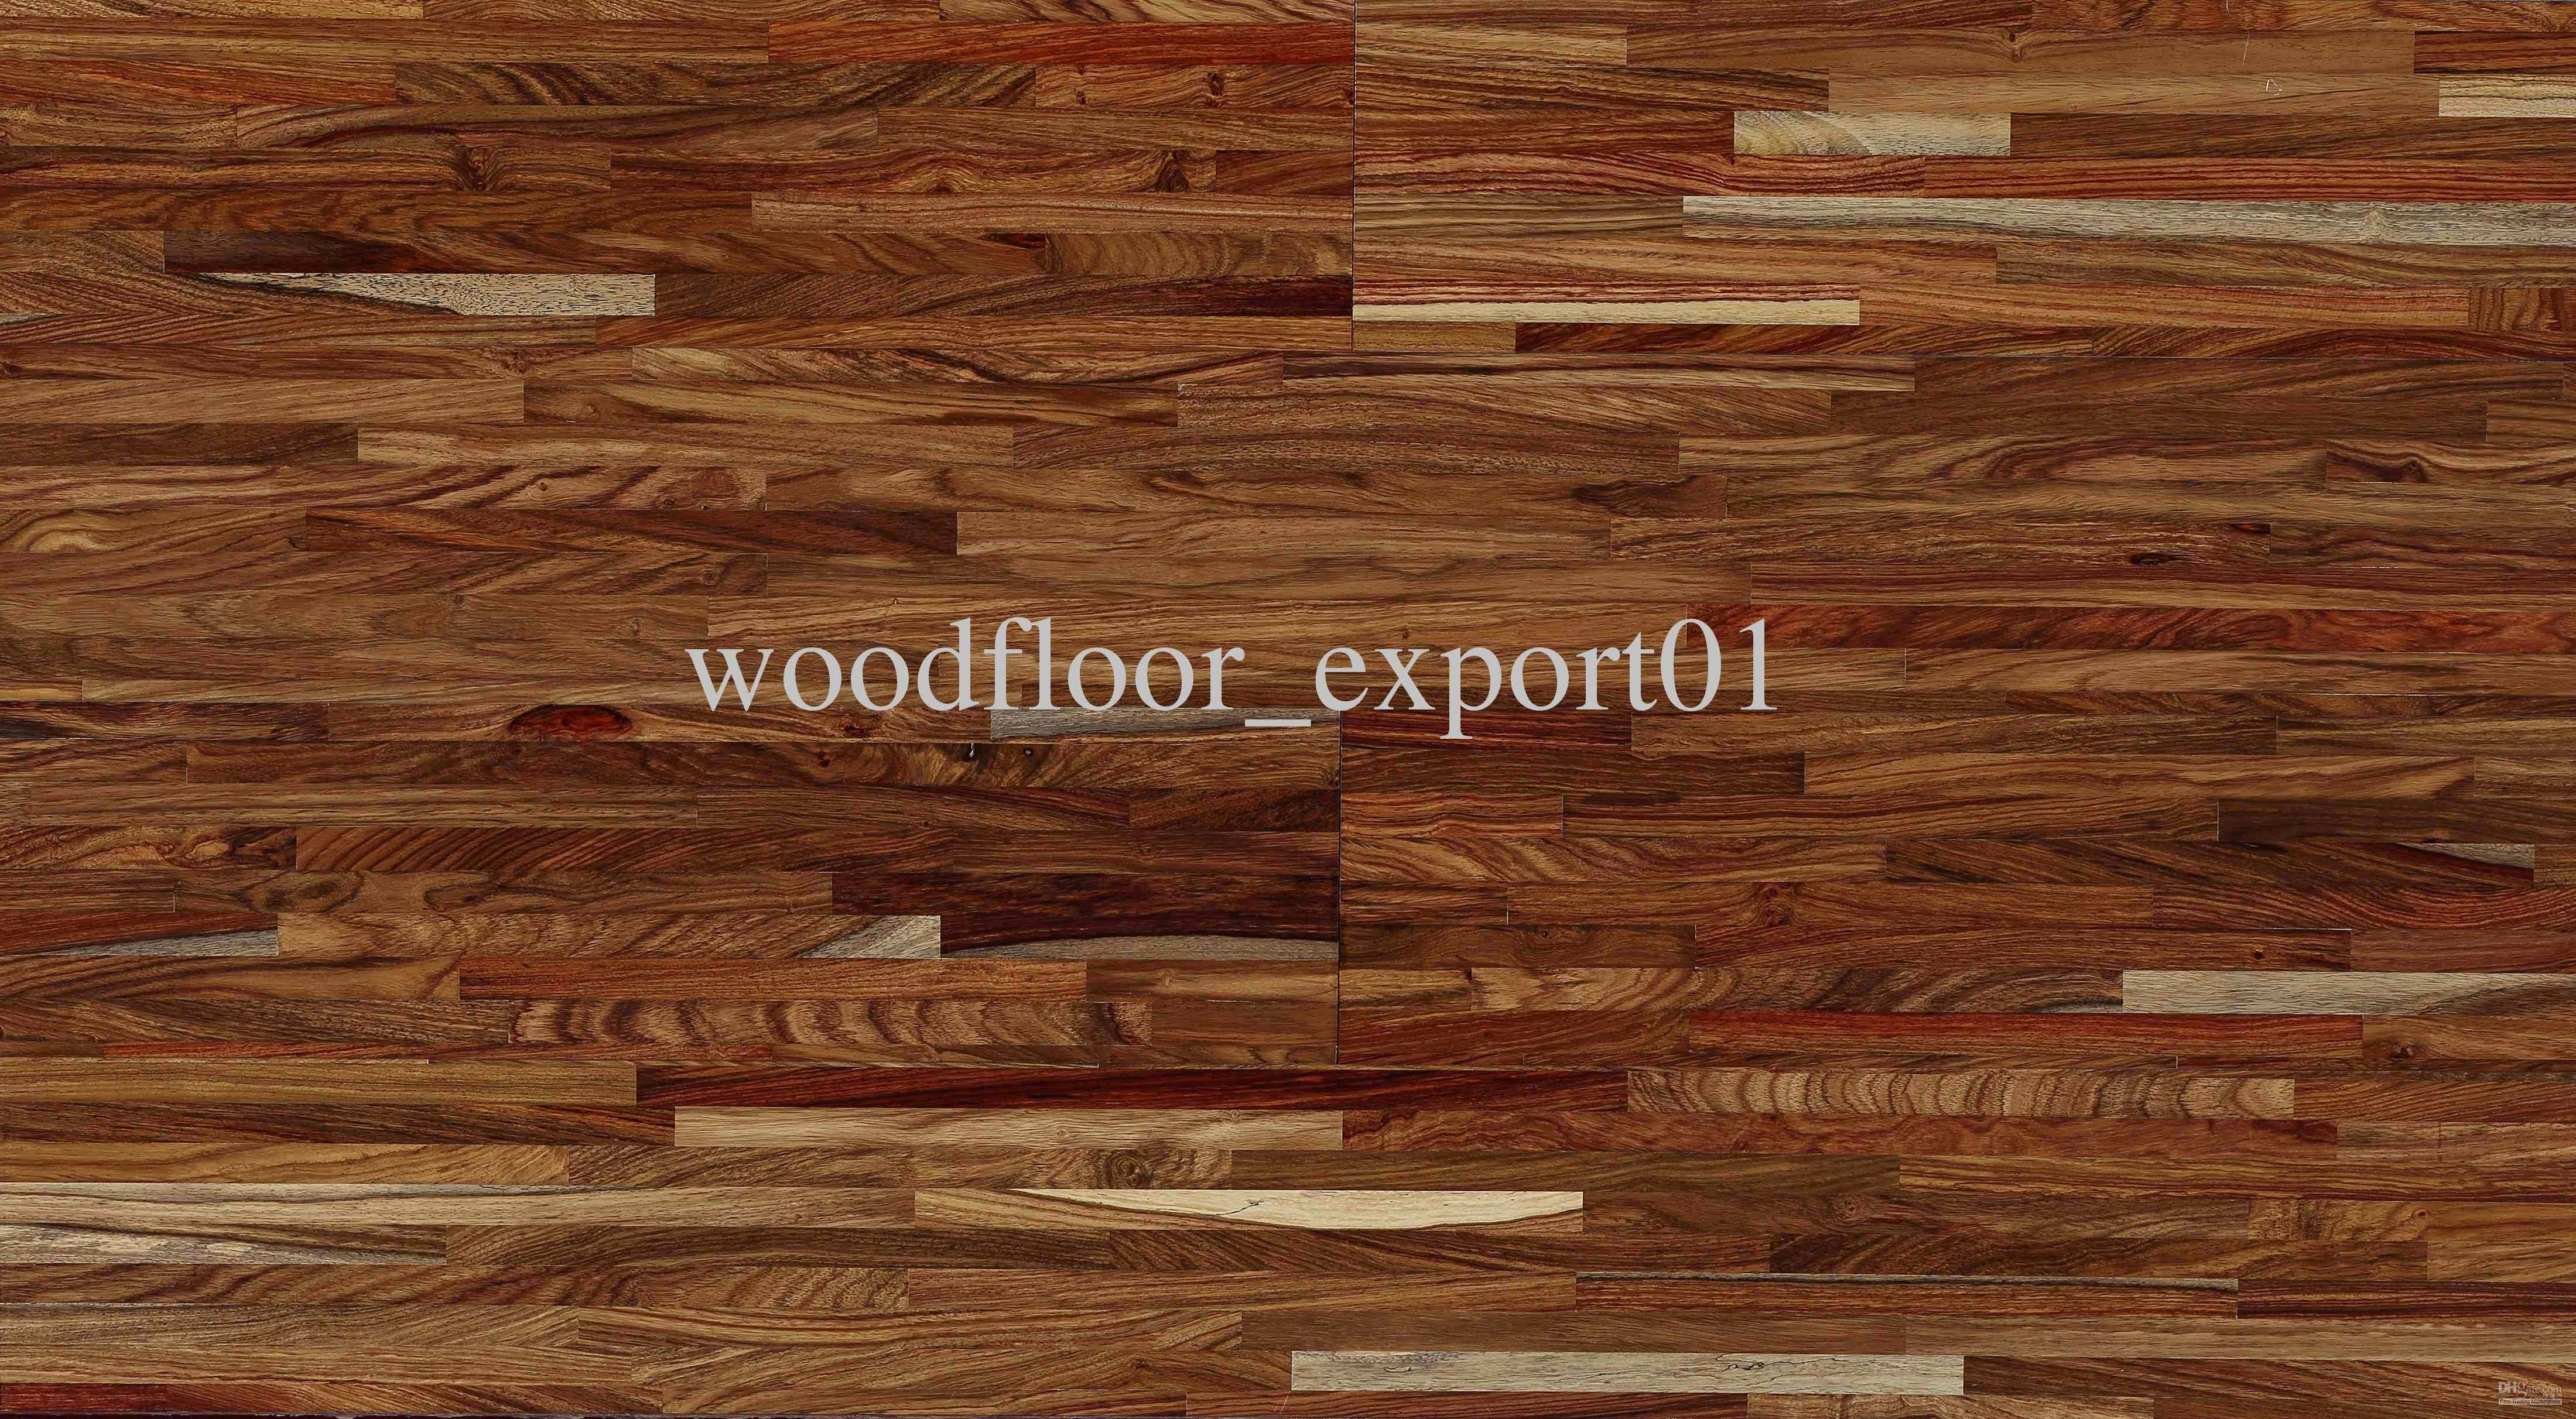 This Old House Sanding Hardwood Floors Of 19 Luxury Hardwood Refinishing Stock Dizpos Com Intended for Hardwood Refinishing Awesome 50 New Restaining Hardwood Floors 50 S Photos Of 19 Luxury Hardwood Refinishing